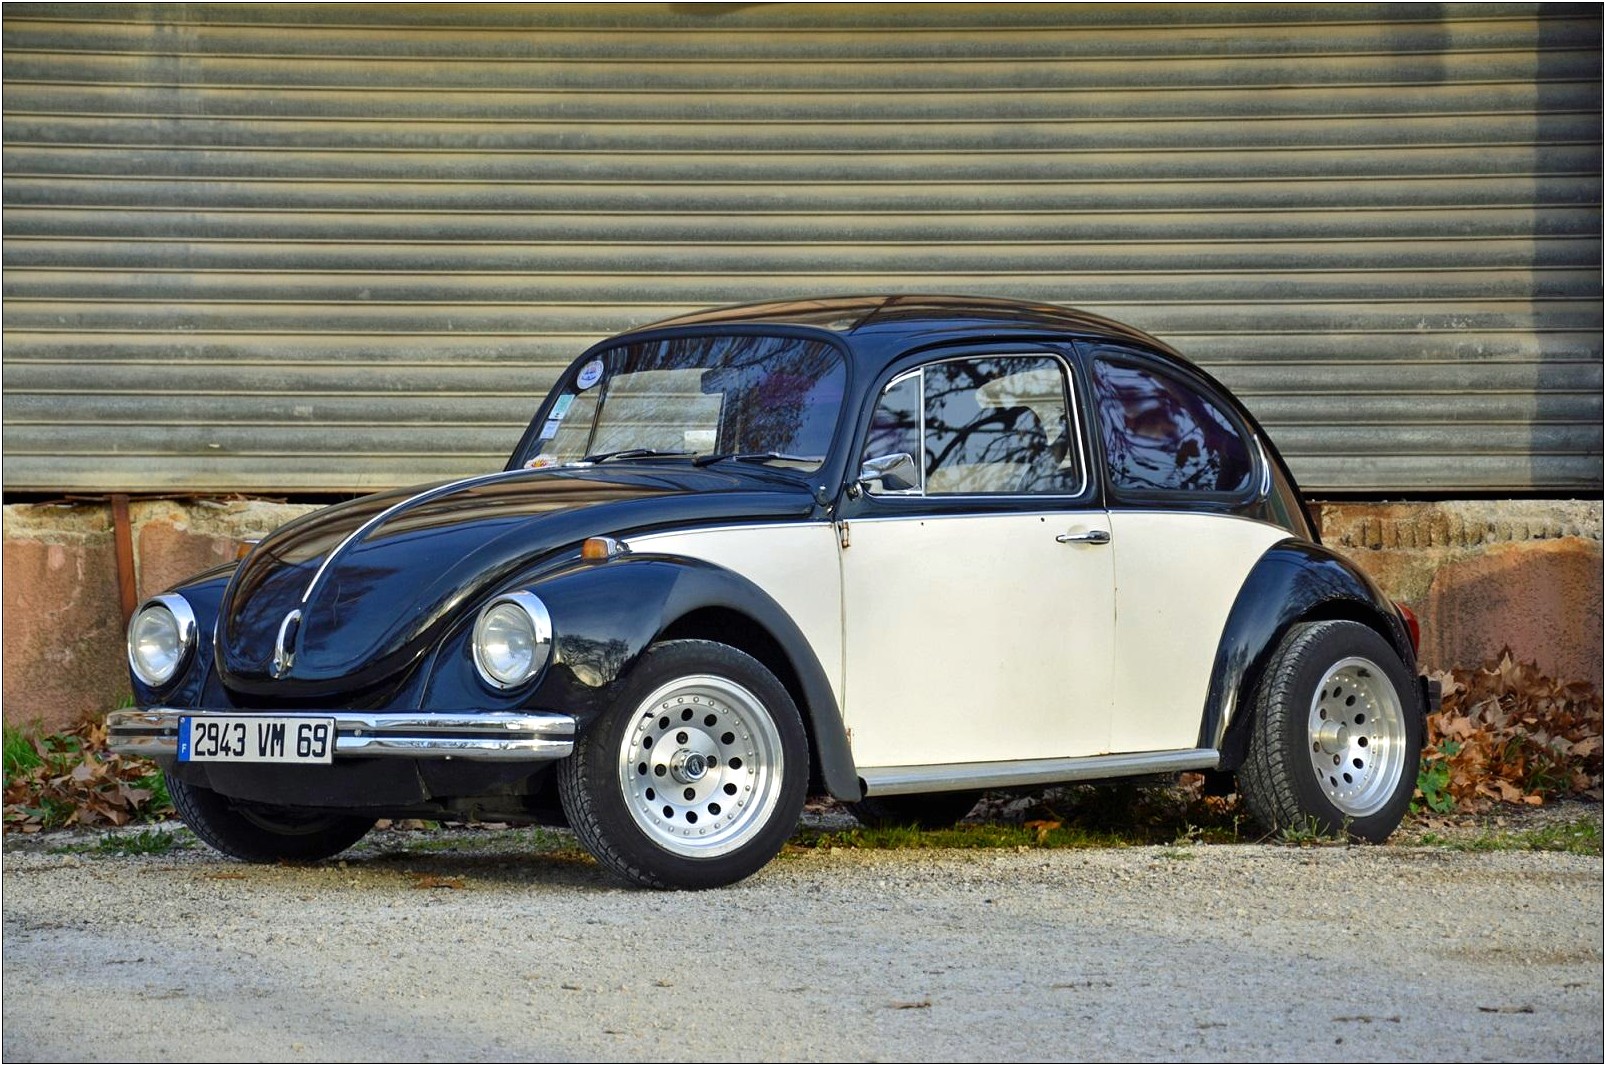 1969 Volkswagen Beetle Free Vehicle Template